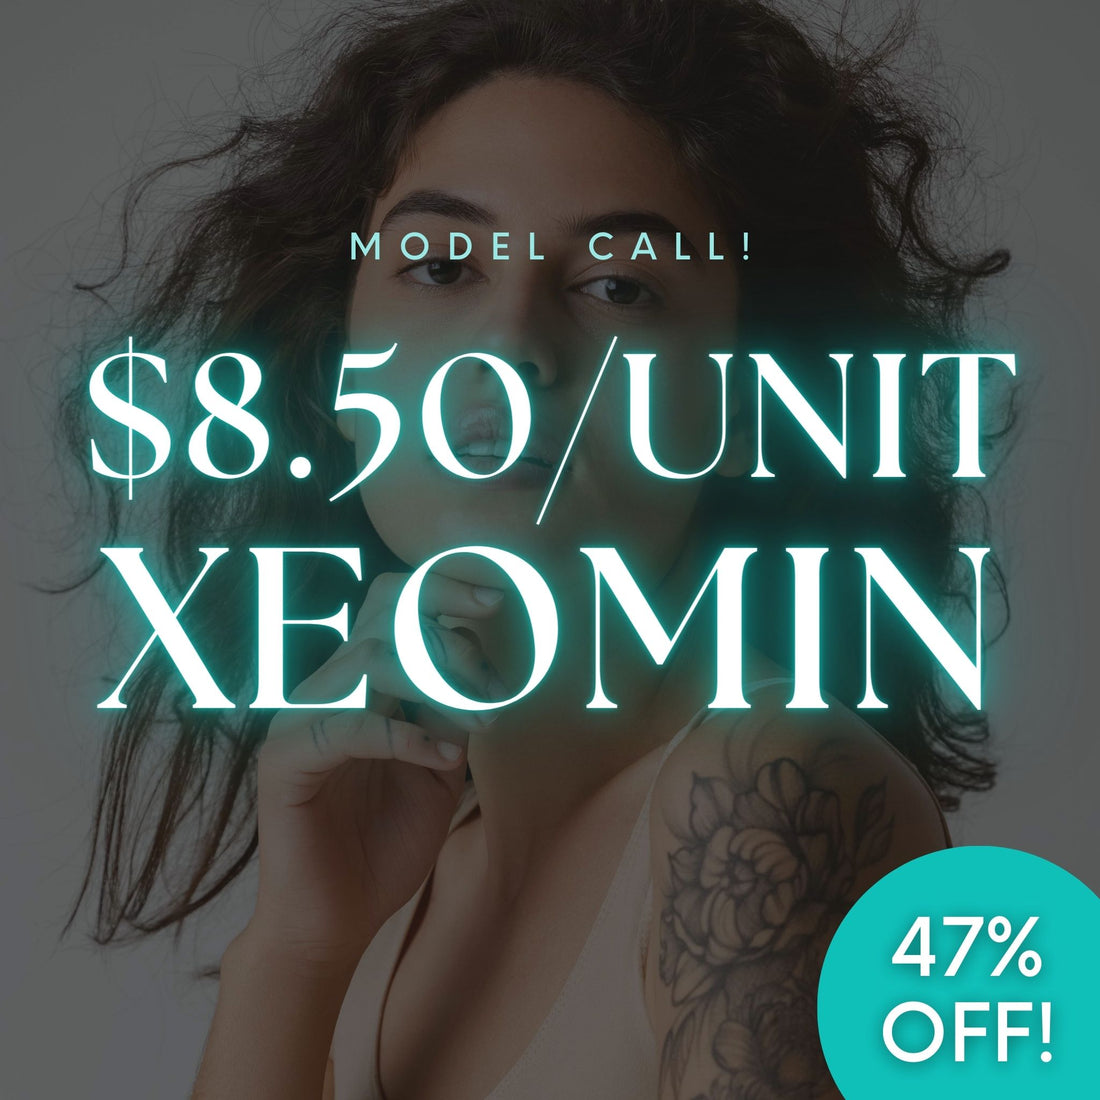 Model Call! $8.50/Unit Xeomin